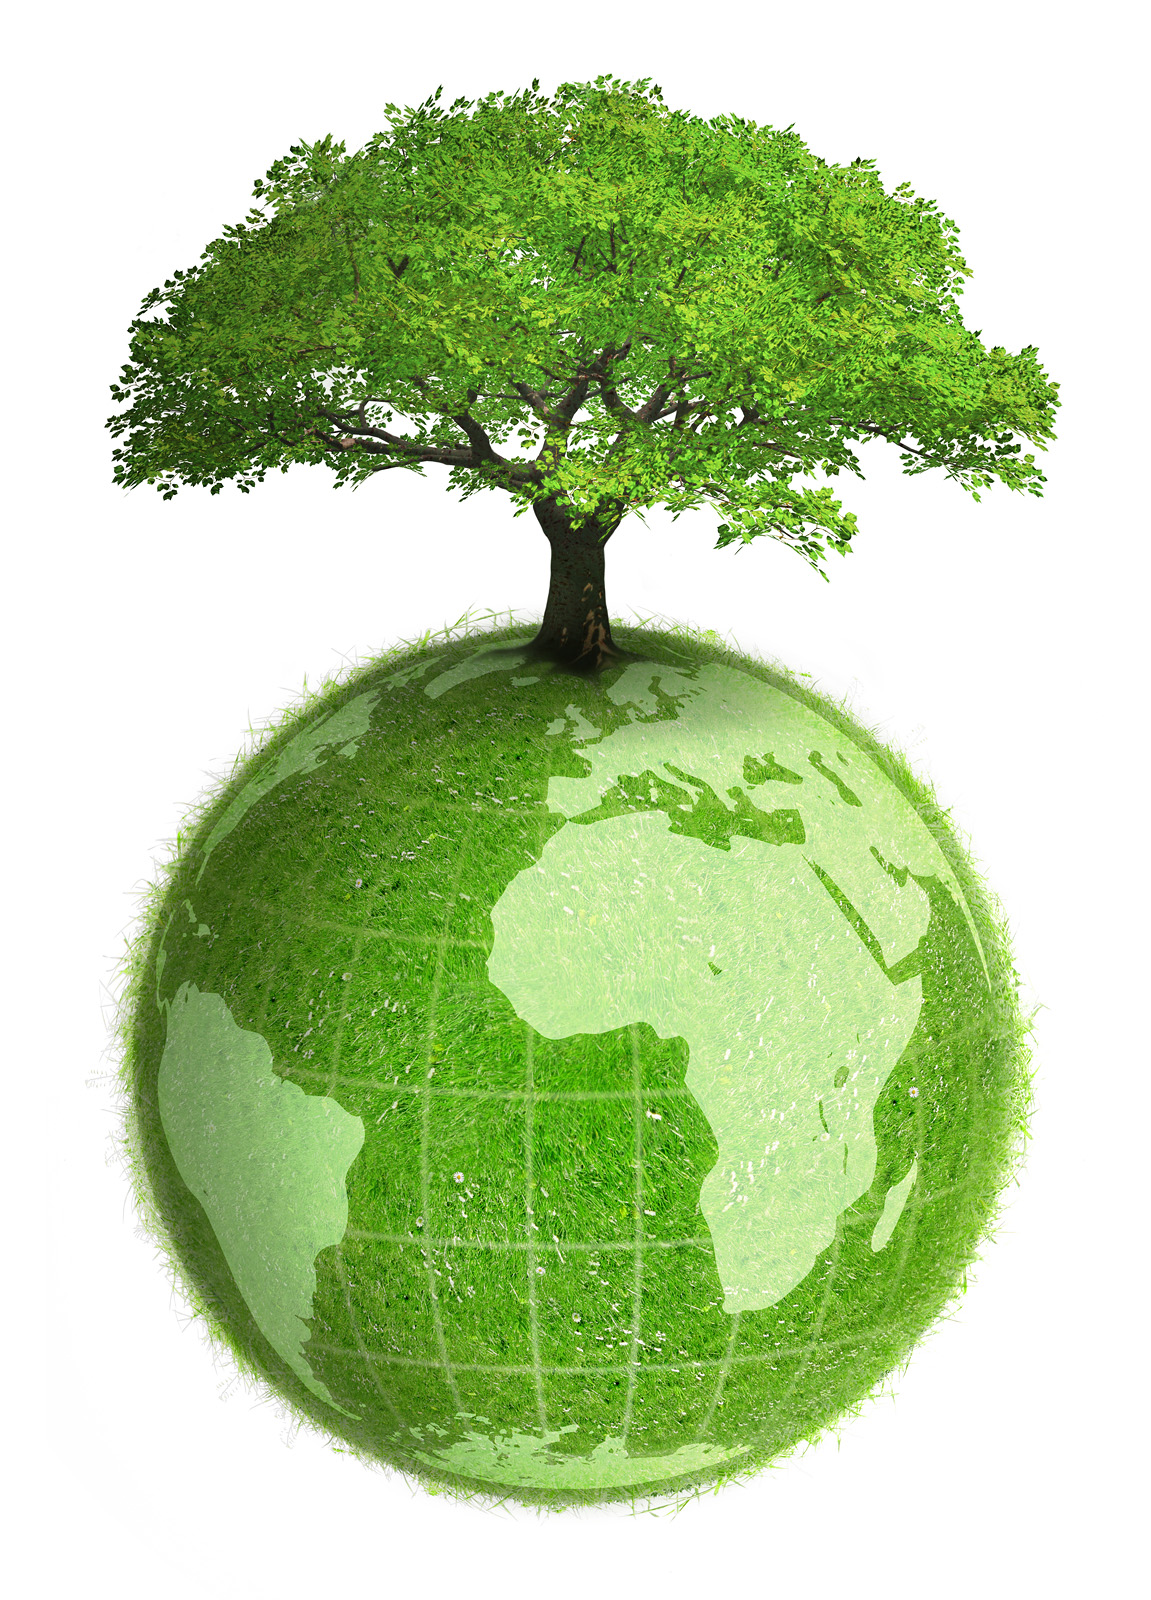 Www ecology. Природа экология. Экологические картинки для презентации. Экология земли. Зеленая Планета дерево.